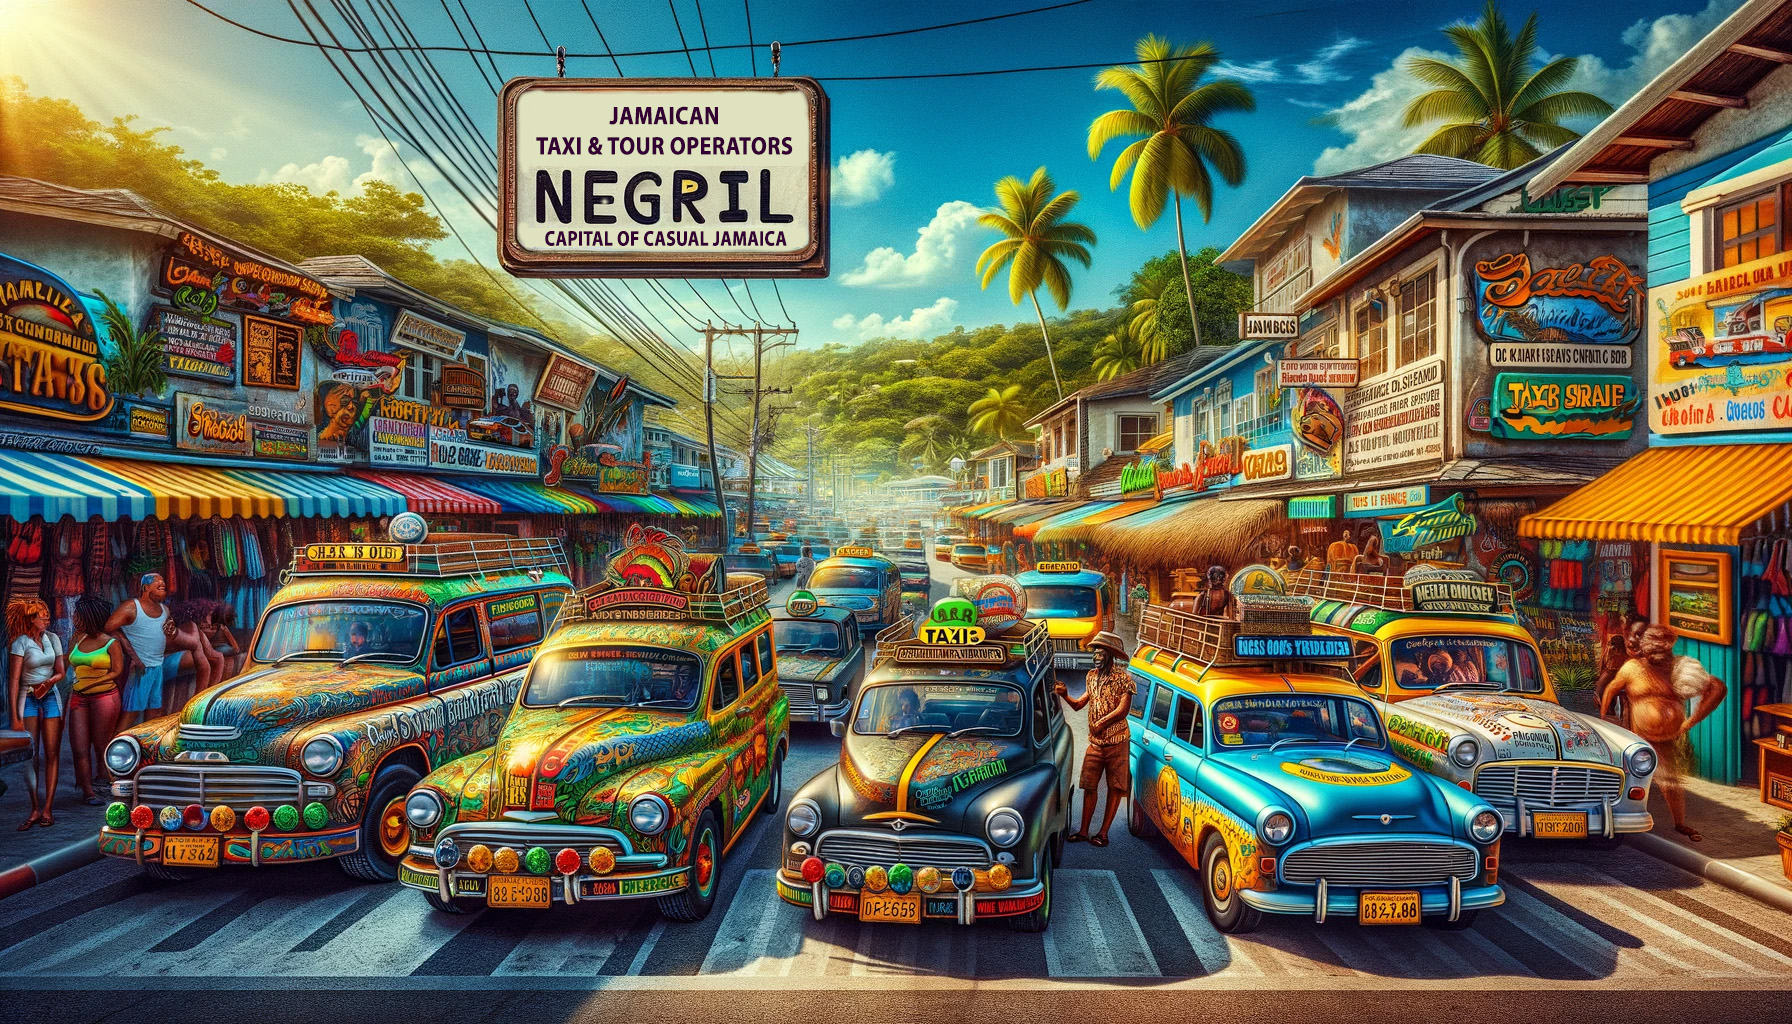 Jamaican Taxi & Tour Operators - Negril Capital of Casual Jamaica